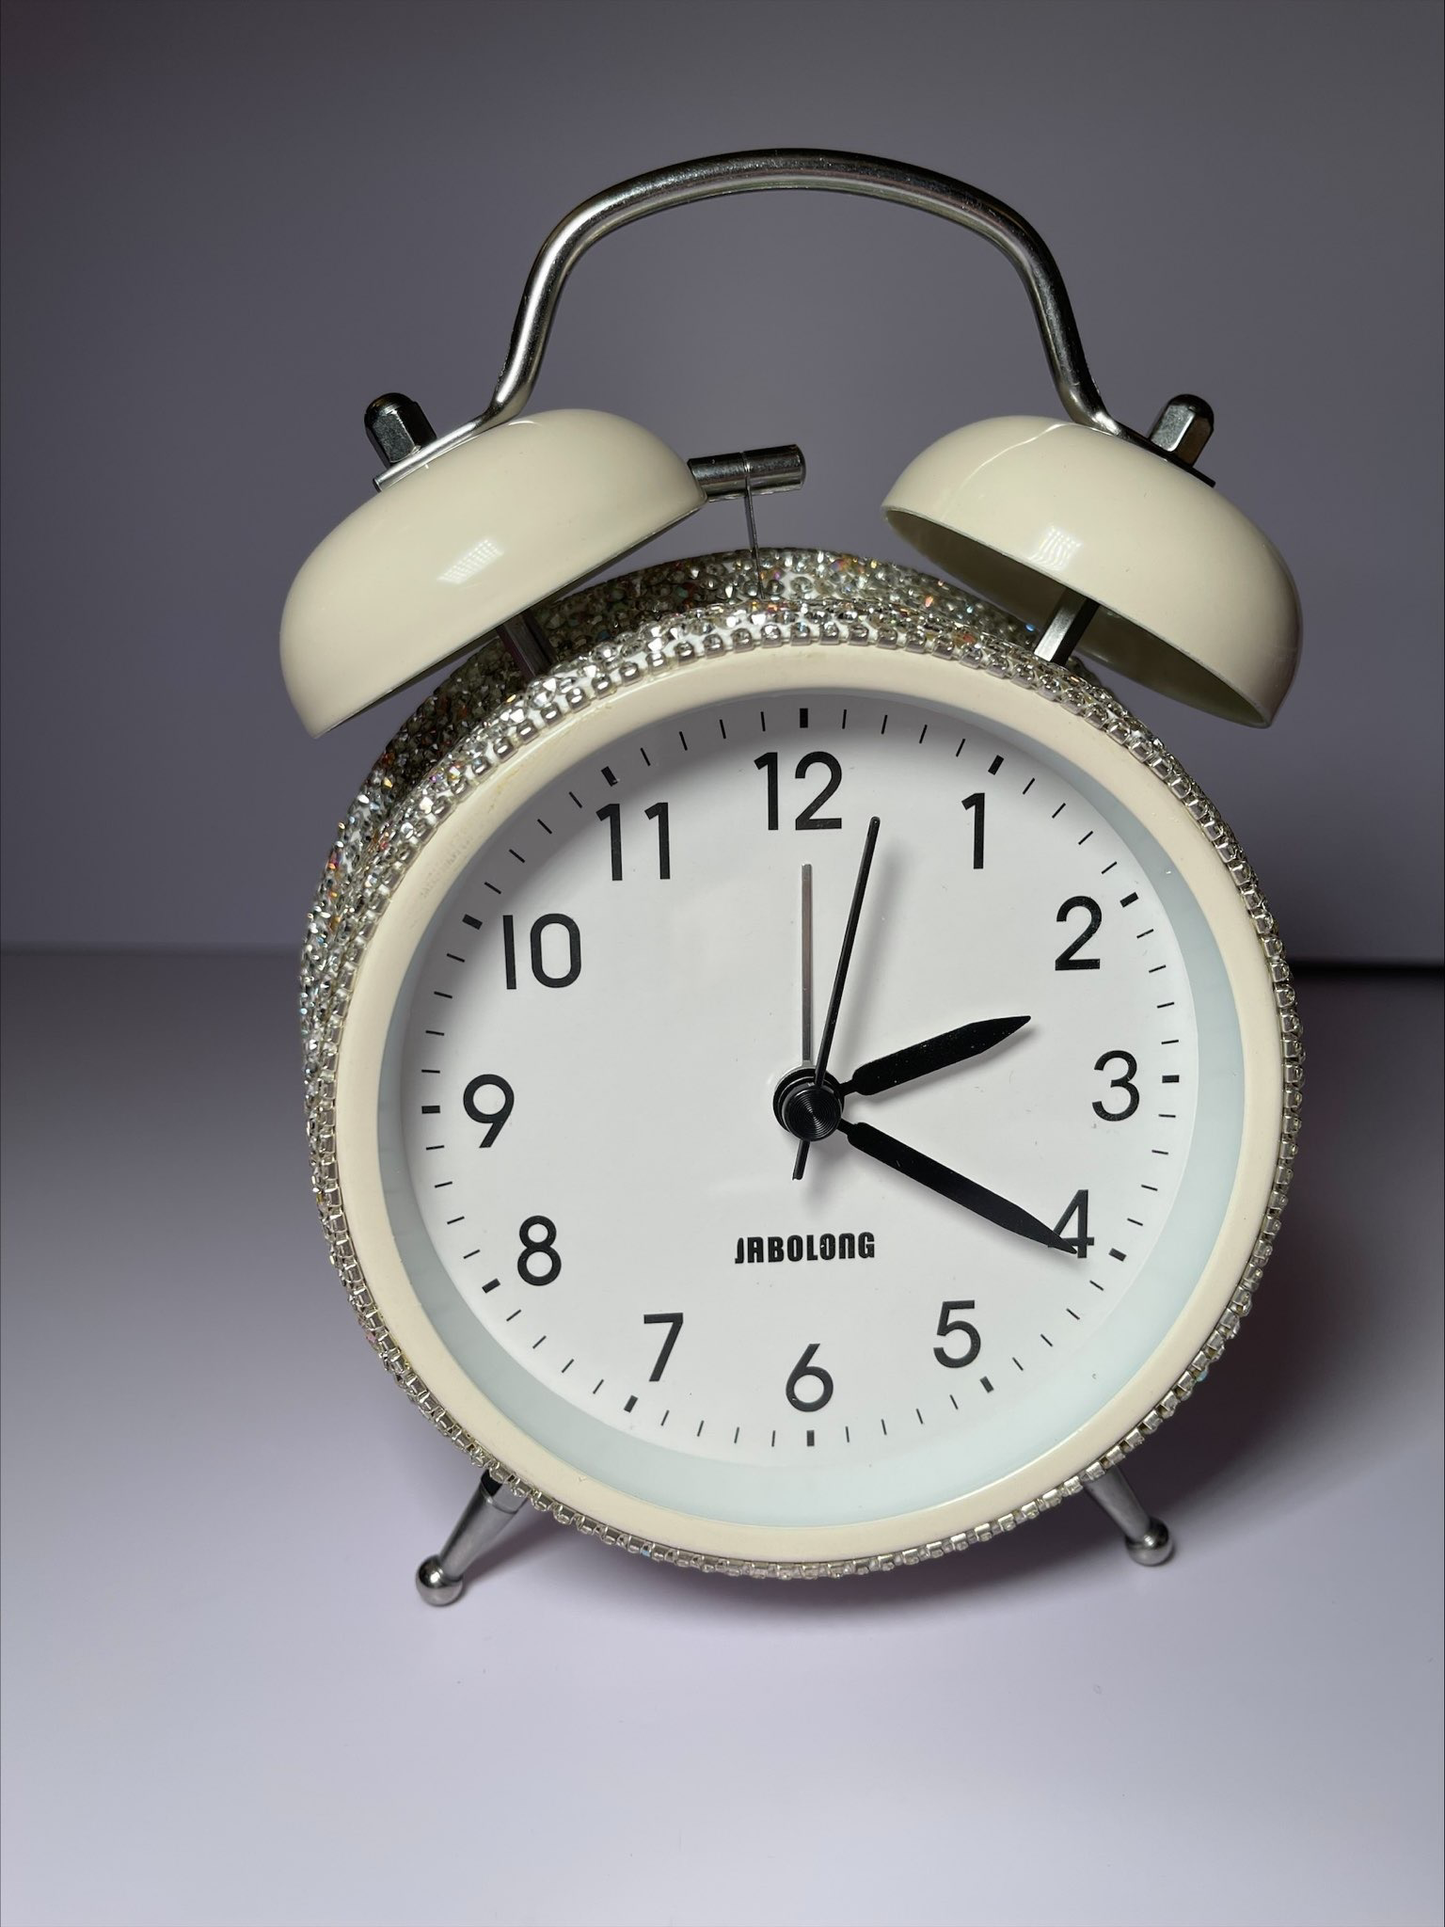 Cute Bling Dazzling Rhinestone Bell Vintage Alarm Clock for Bedroom, Retro Analog Alarm Clock, Effective for Heavy Sleepers